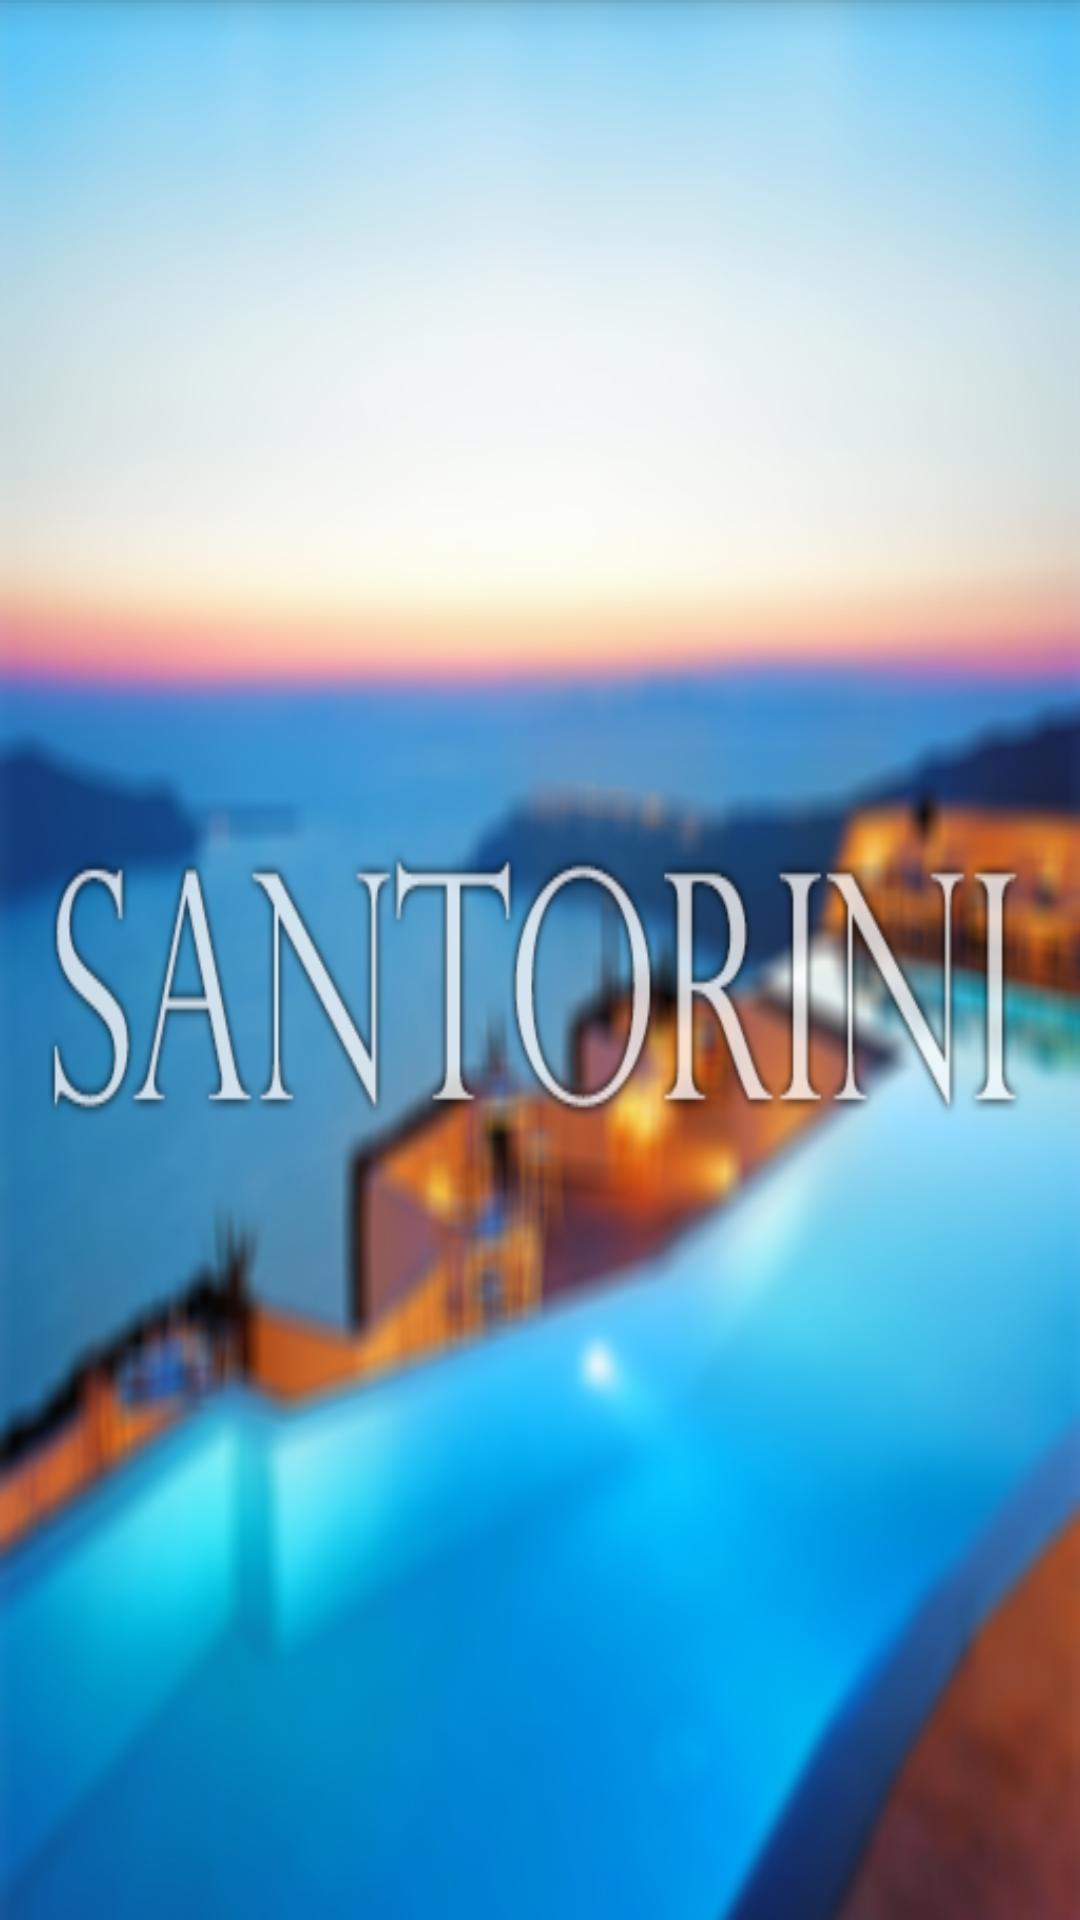 Santorini Wallpaper HD For Android Apk